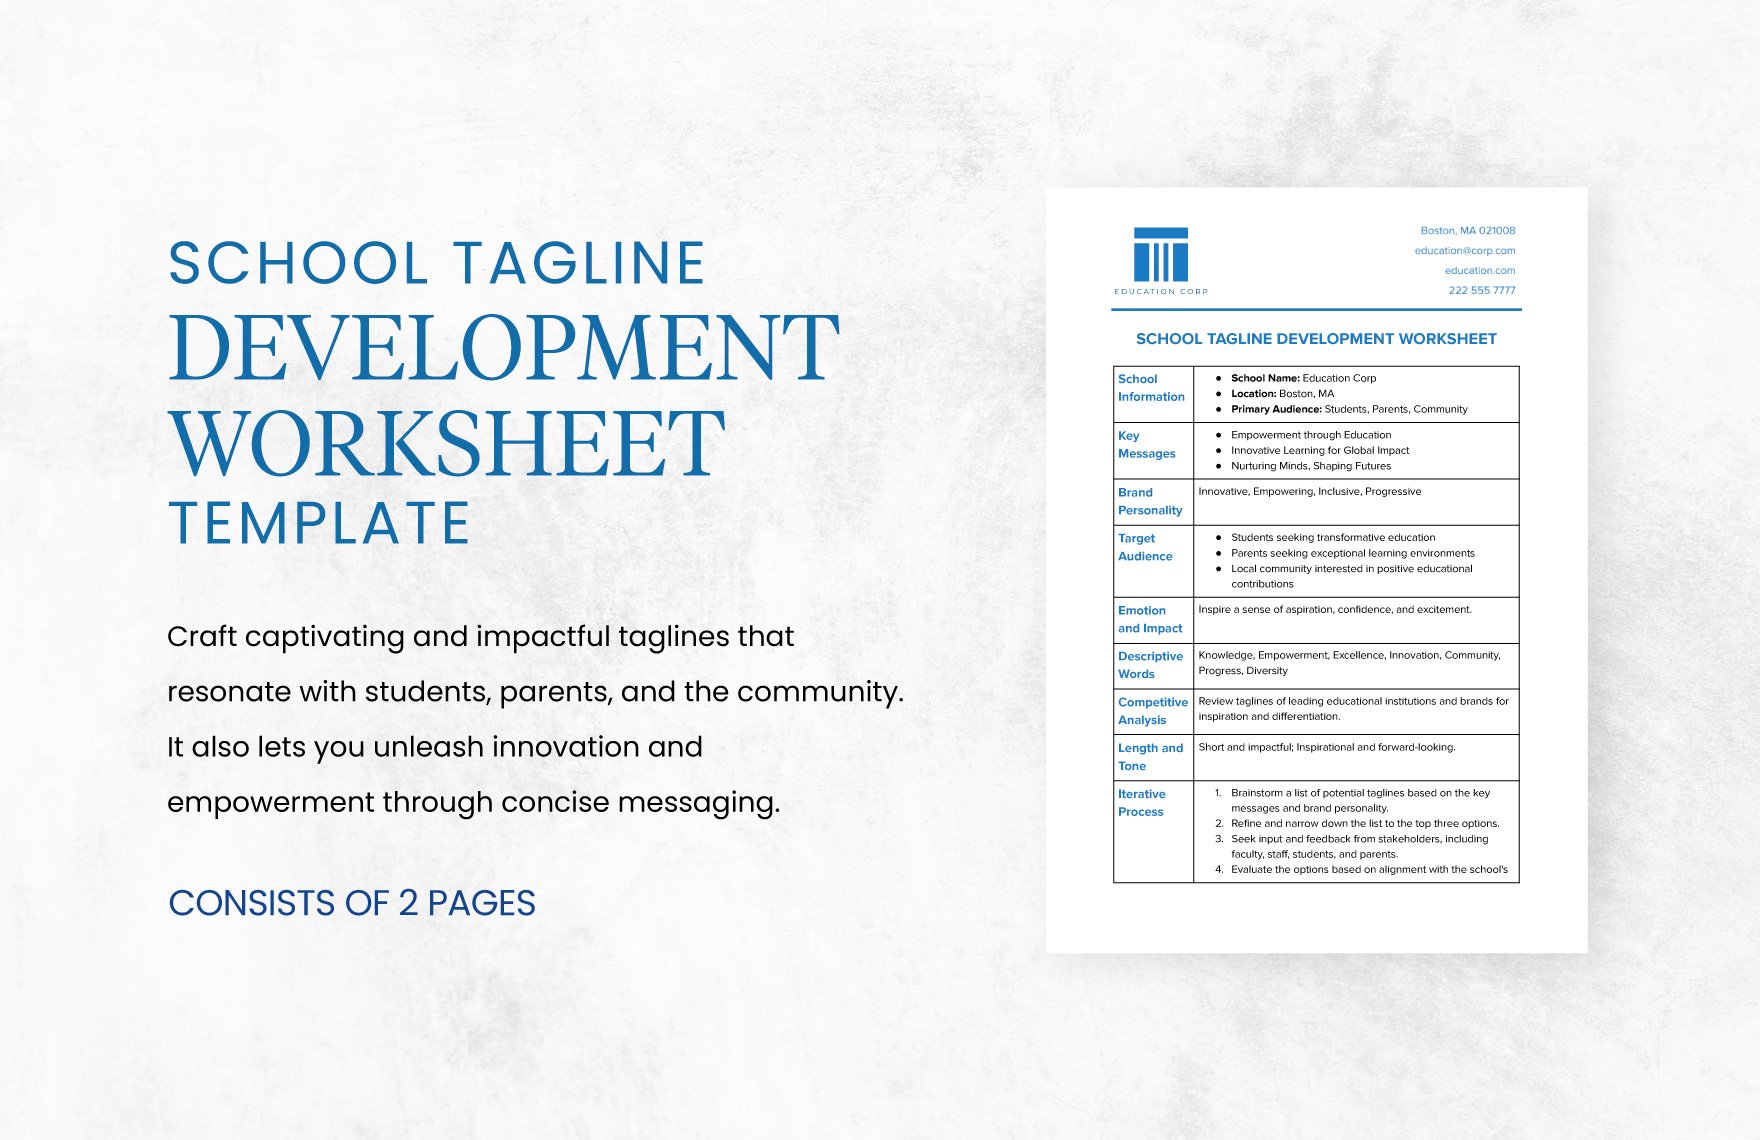 School Tagline Development Worksheet Template